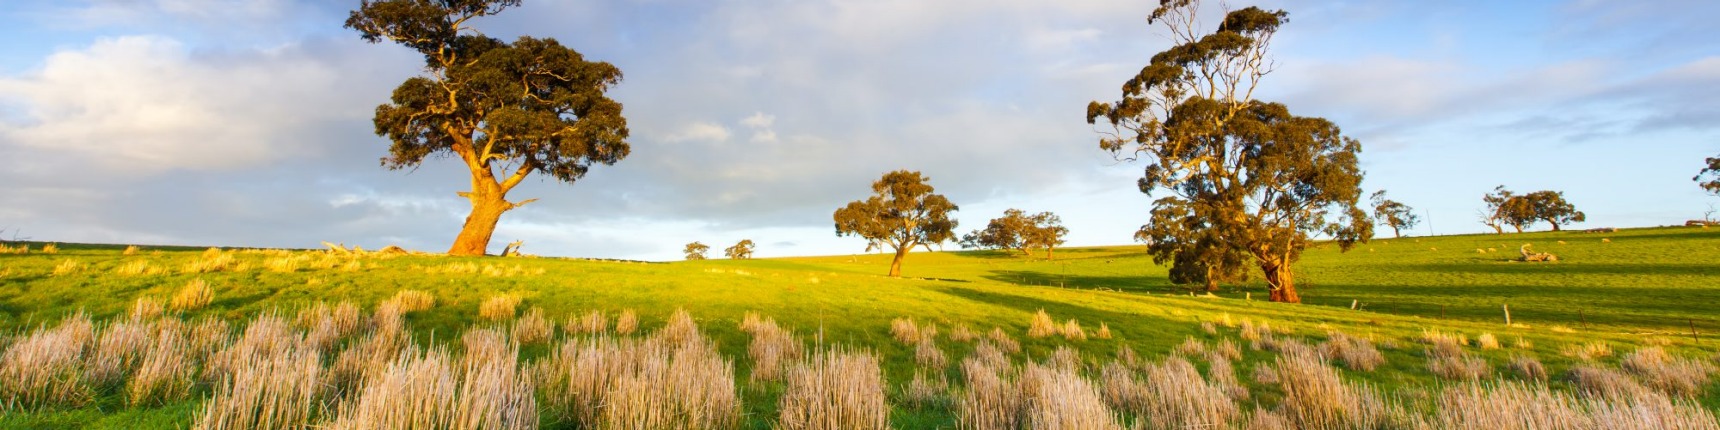 South Australia, countryside